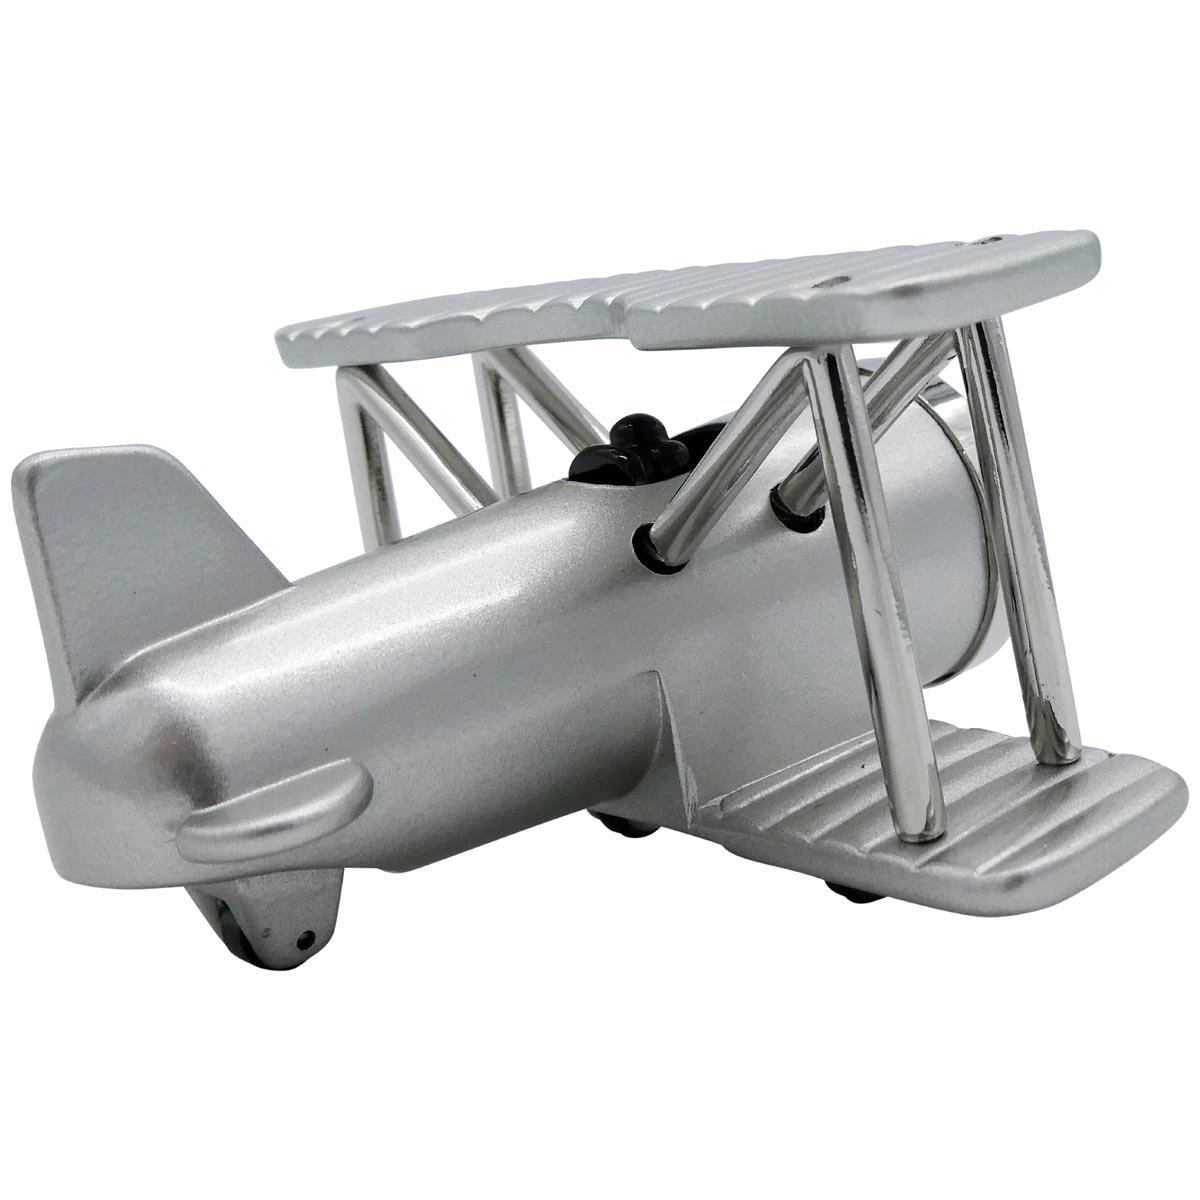 Pilot Toys Silver Biplane Desk Clock